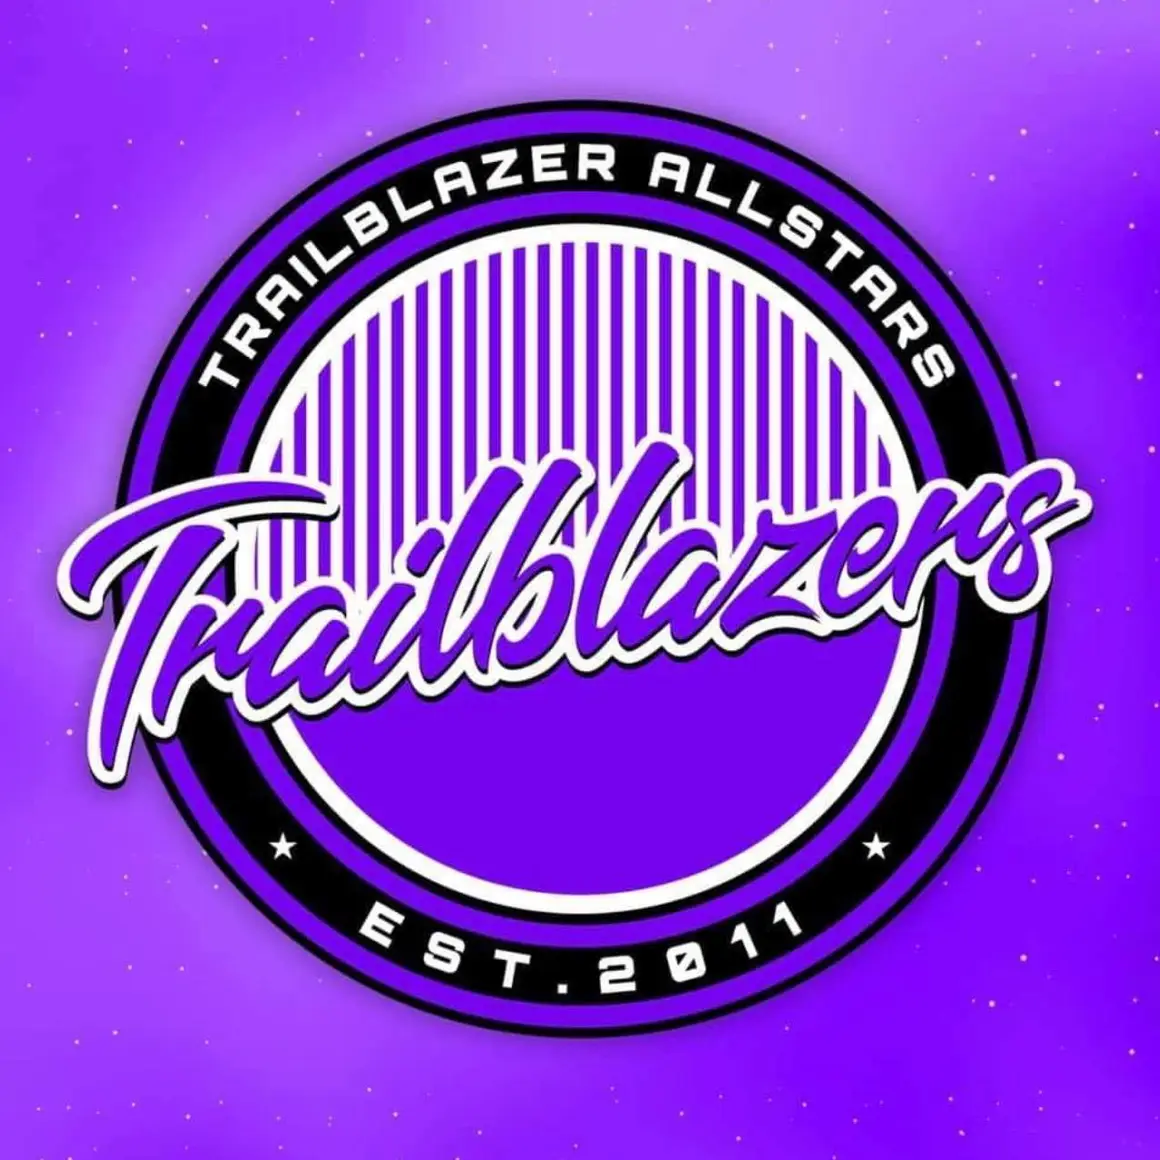 Trailblazers Allstars